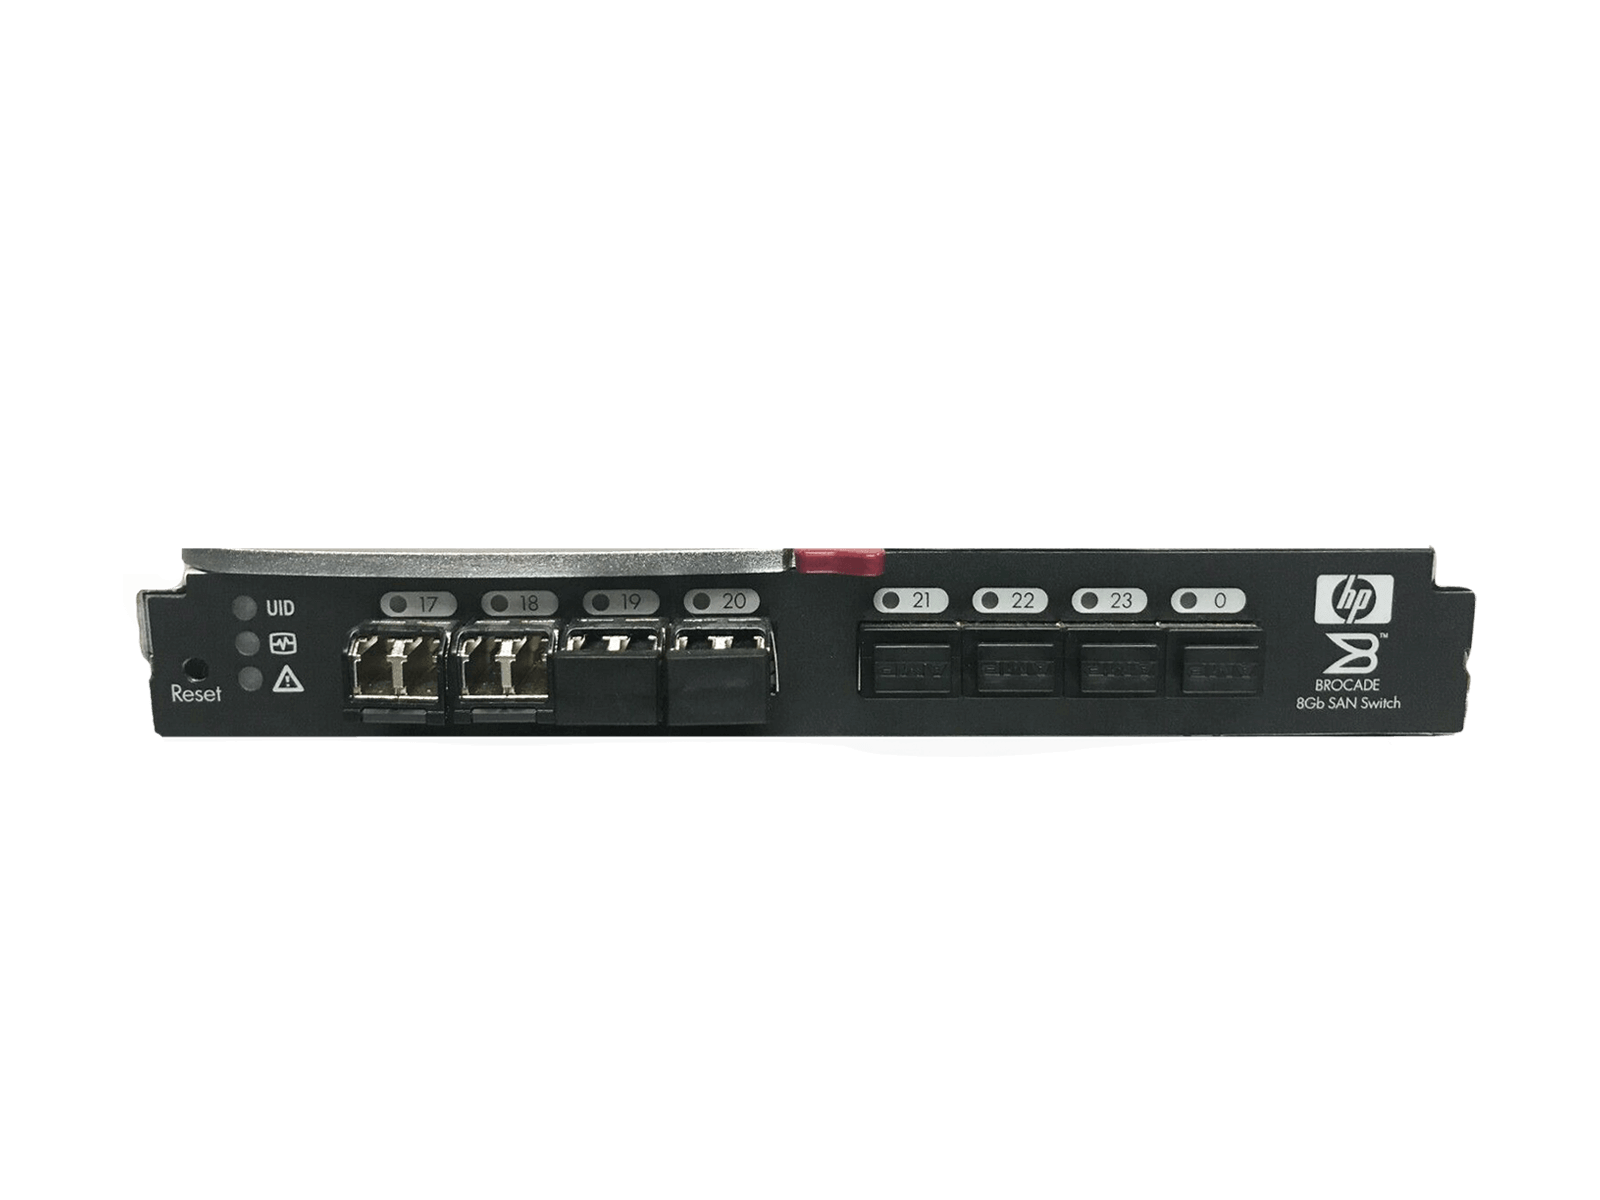 HP AJ821B B Series 8/24c Brocade SAN Switch for BladeSystem C-Class 489865-002.